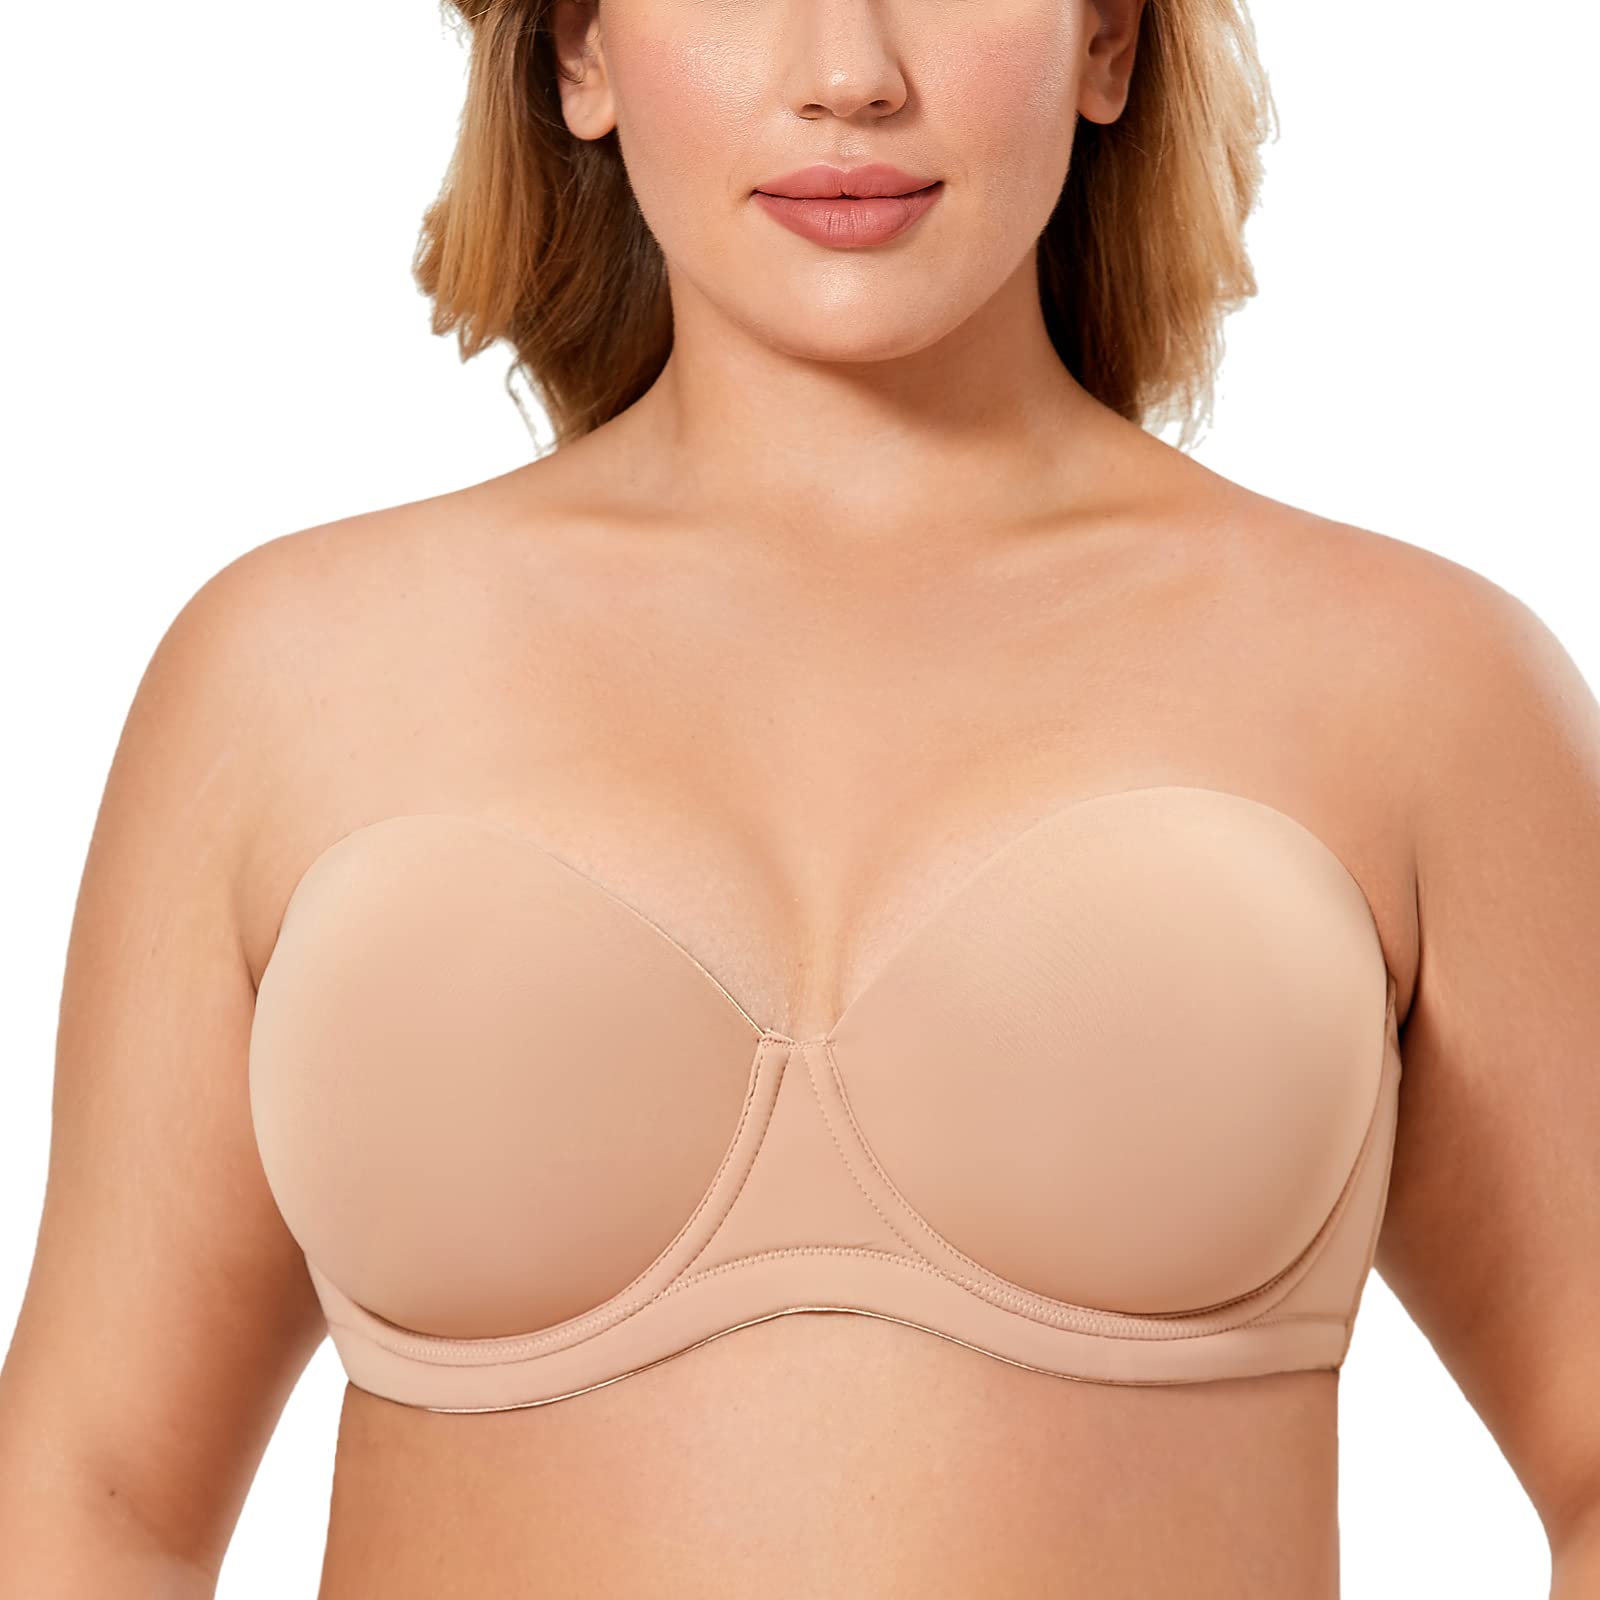 FW®-Women's Underwire Contour Multiway Full Coverage Strapless Bra Plus Size